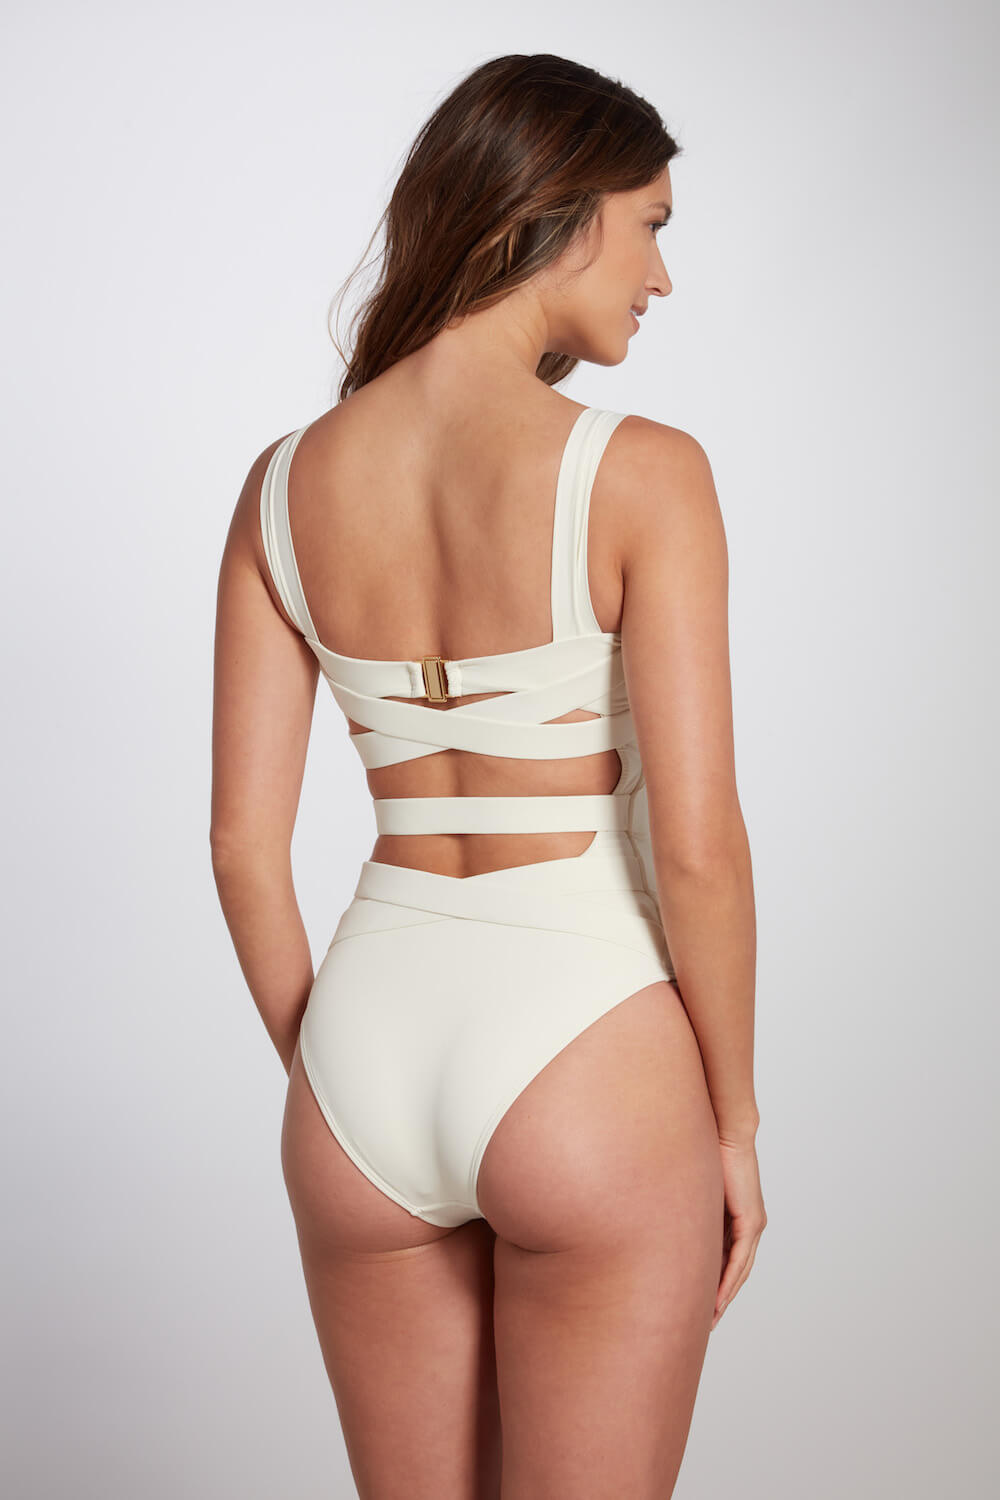 Women's Bikini Sexy Tight Double Shoulder Strap Swimsuit Open Back